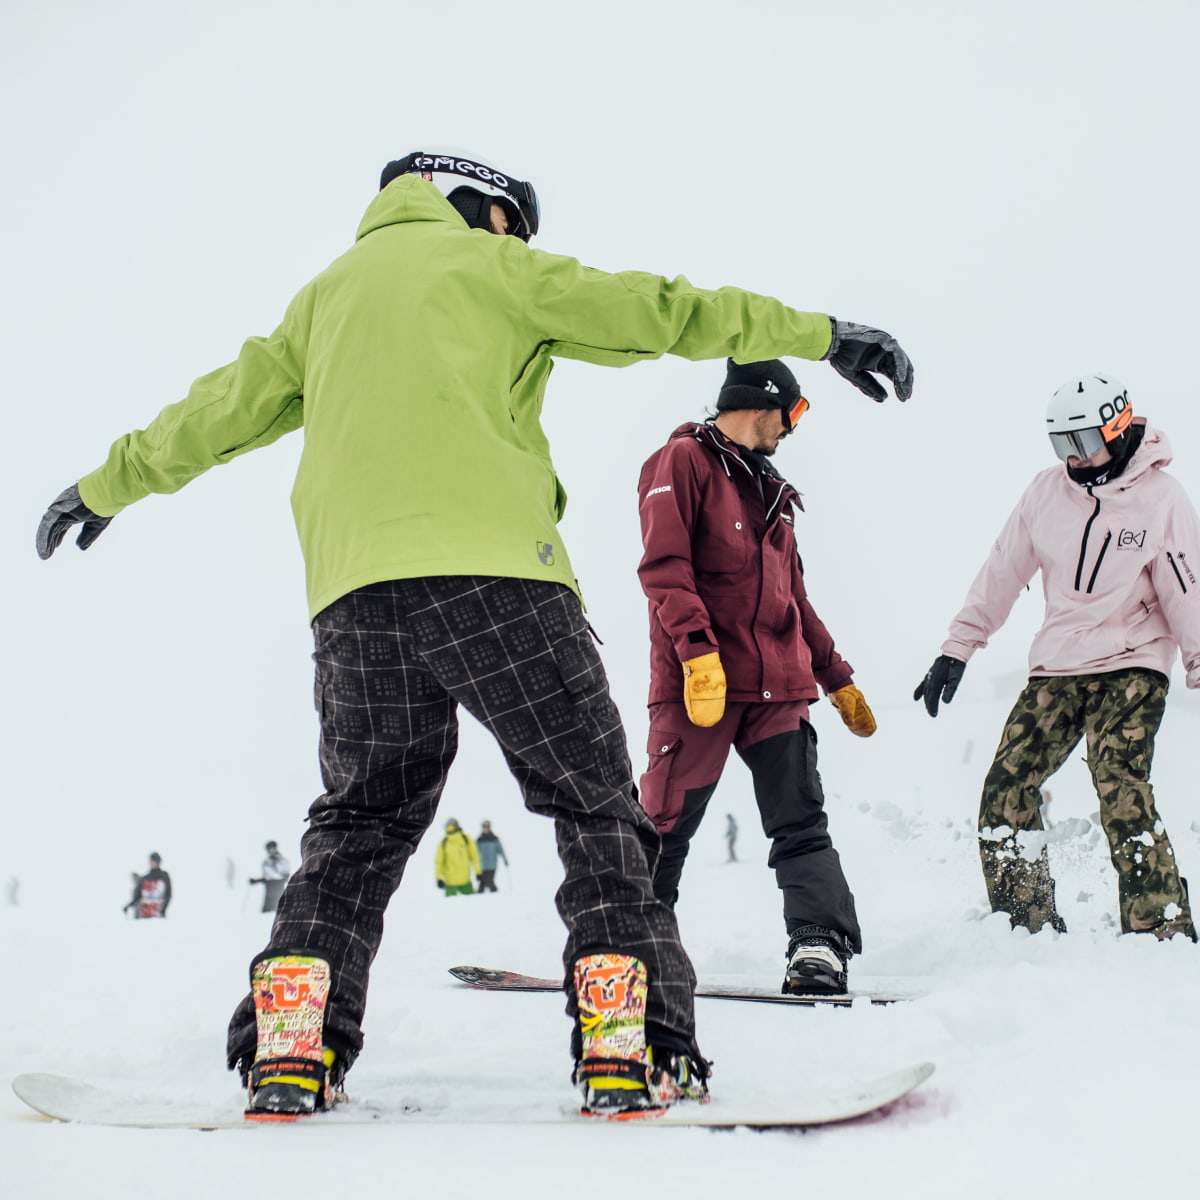 Clases de snowboard para principiantes